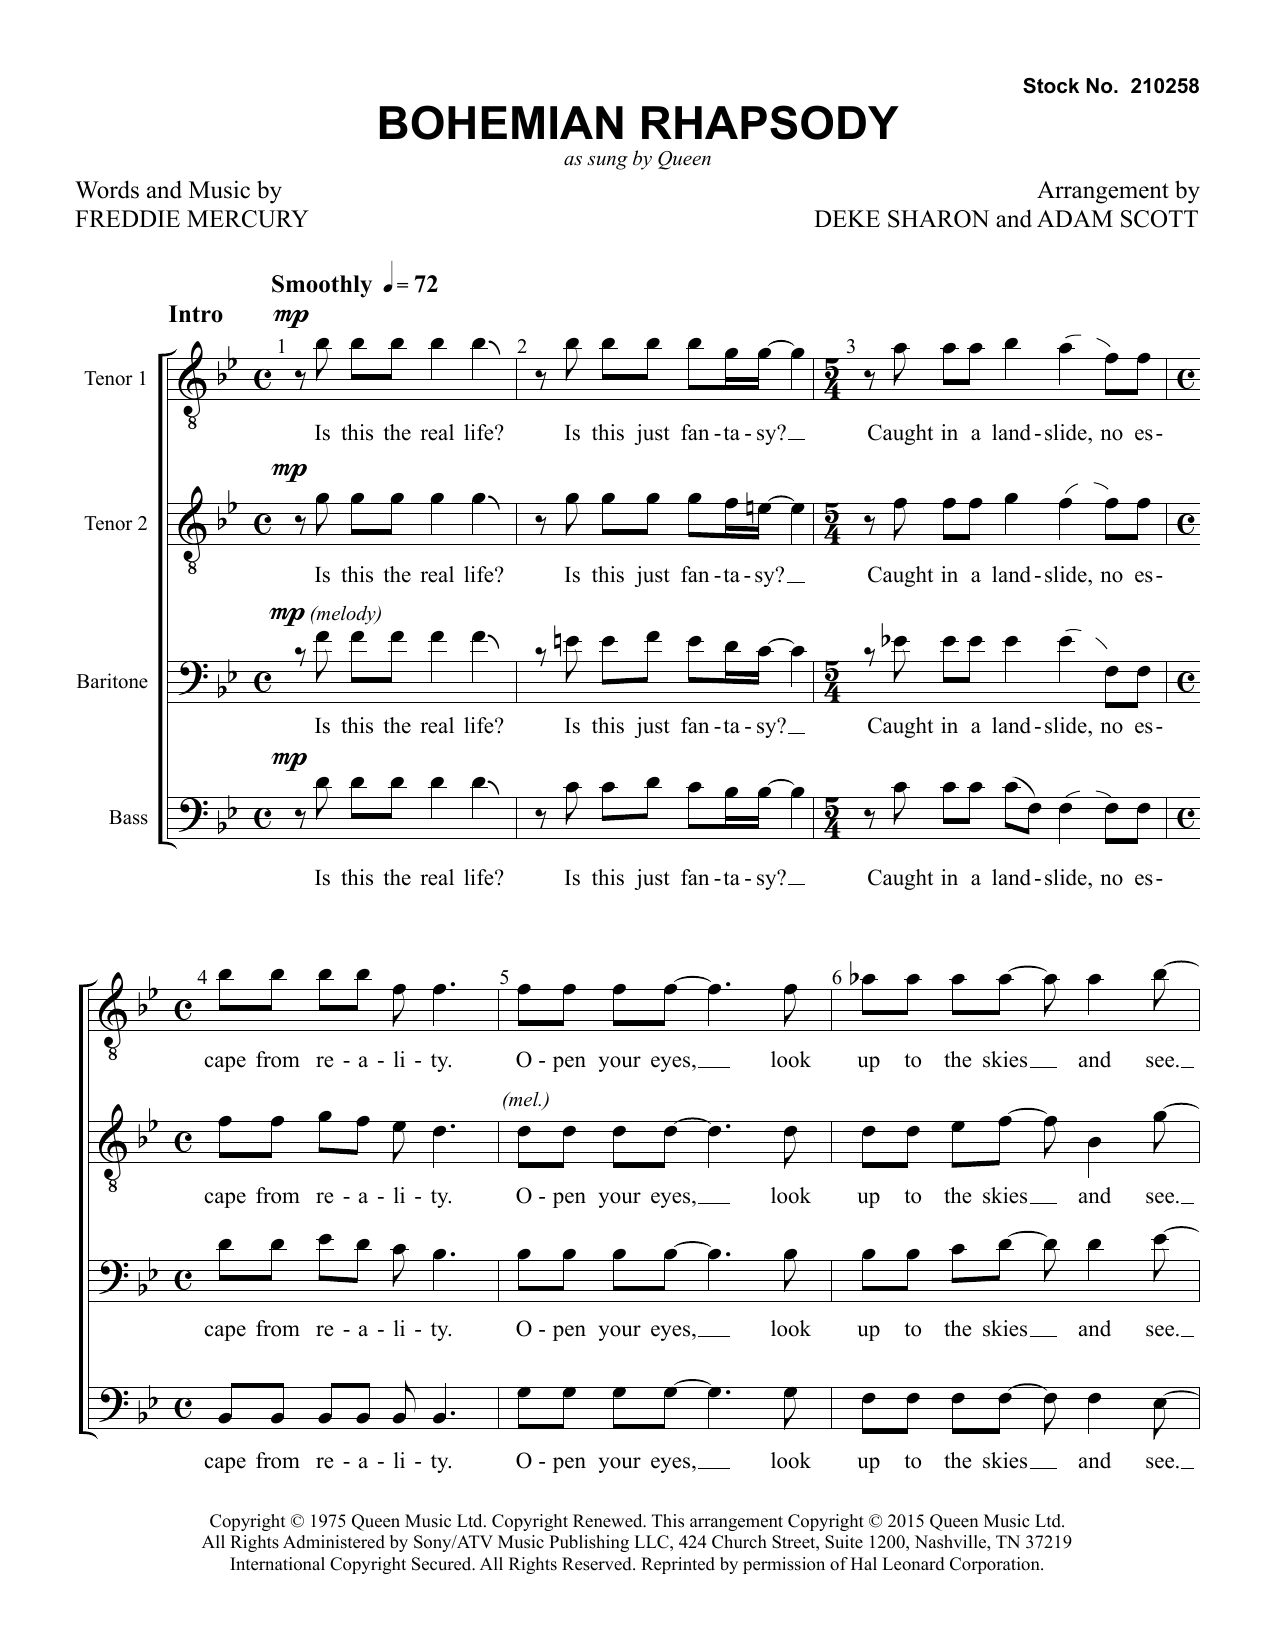 Queen Bohemian Rhapsody (arr. Deke Sharon and Adam Scott) Sheet Music Notes & Chords for TTBB Choir - Download or Print PDF